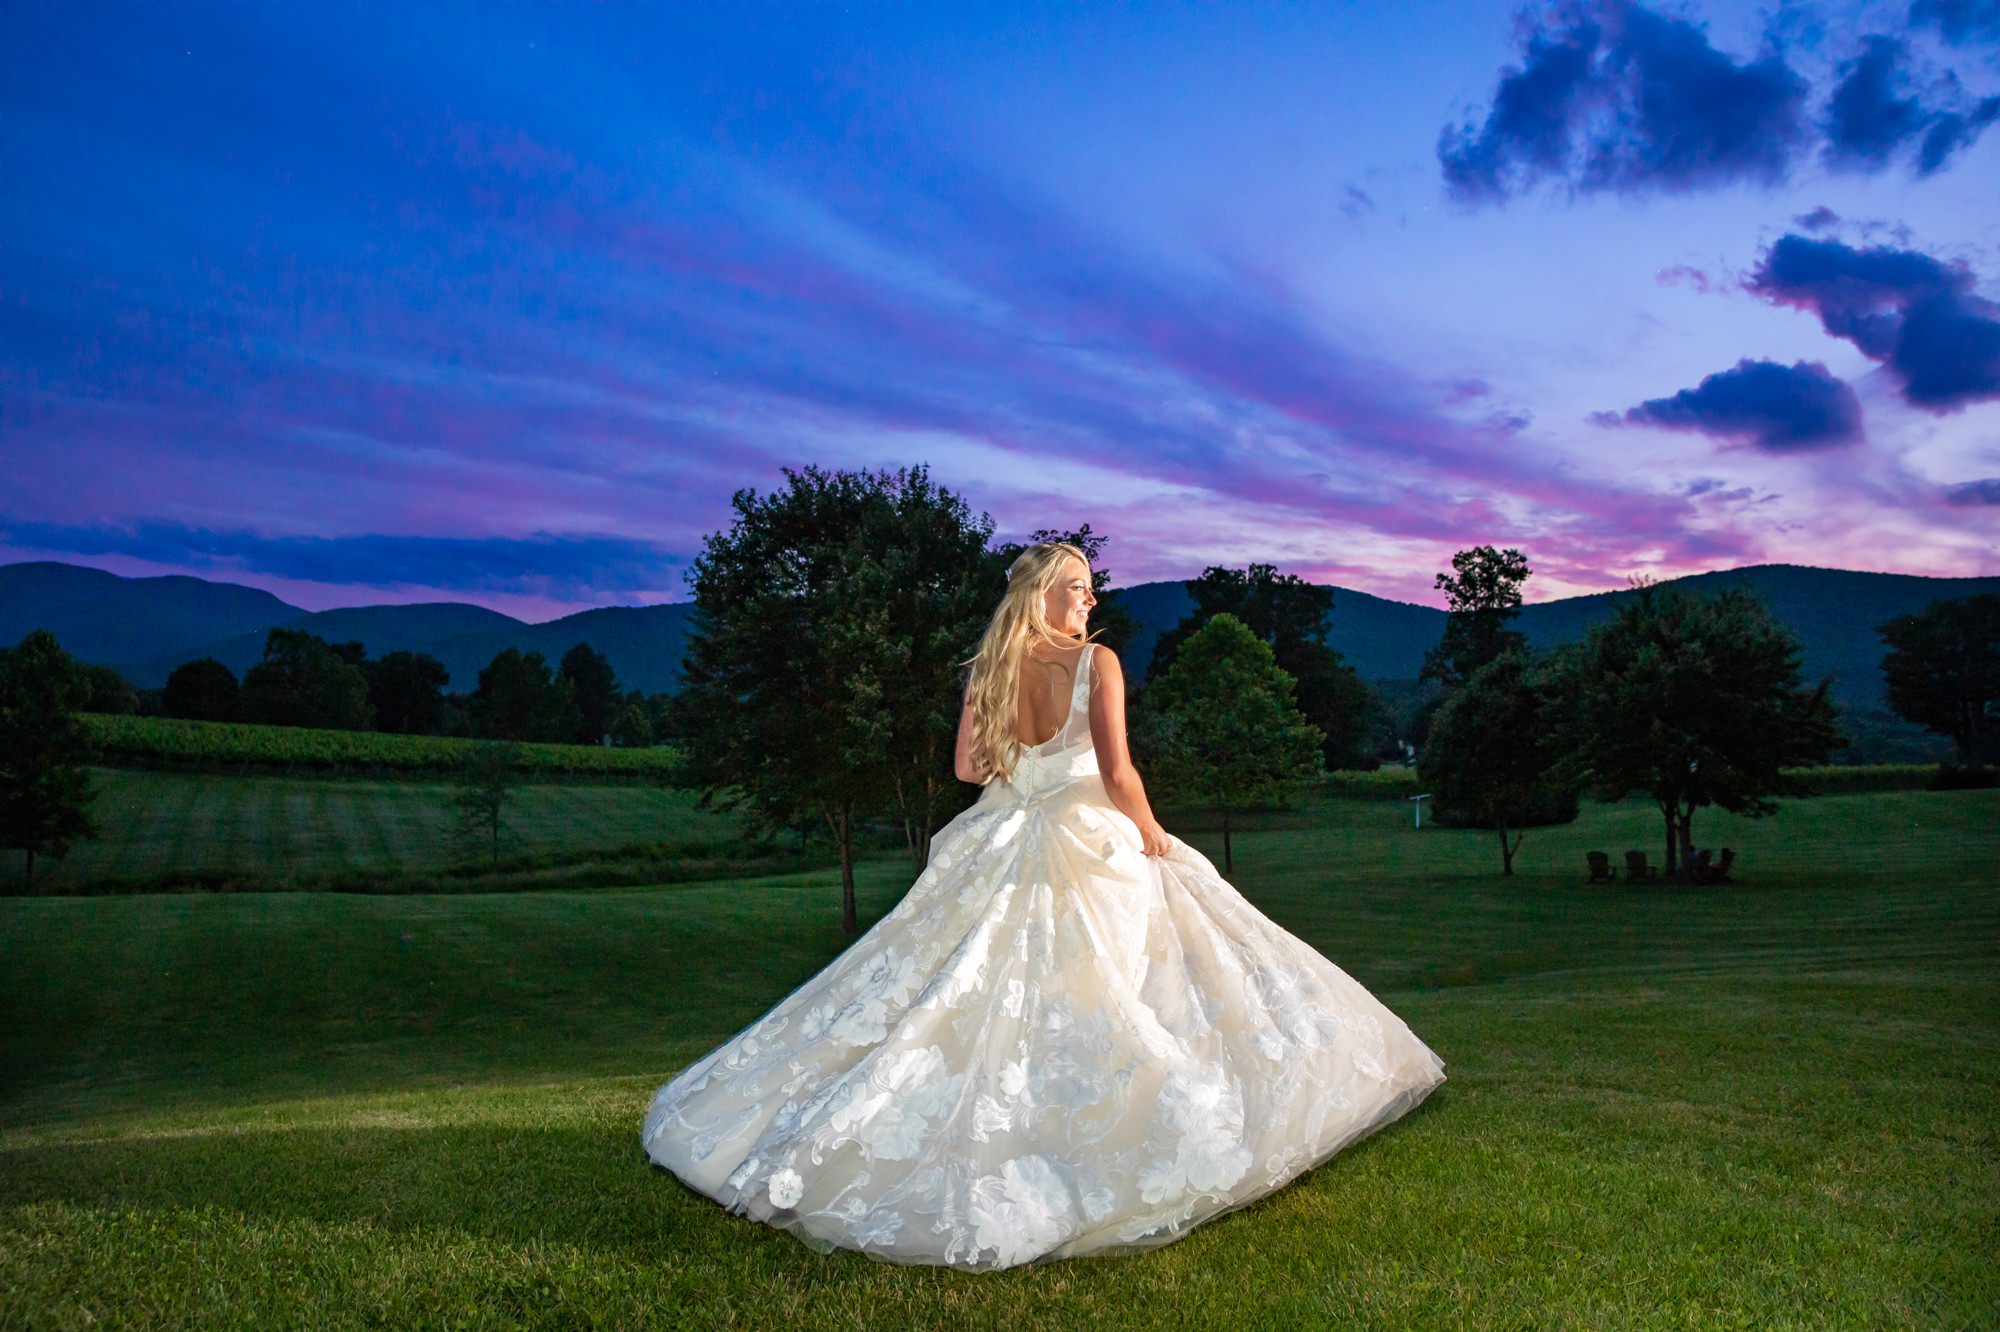 Best Veritas Vineyards Wedding Photographers